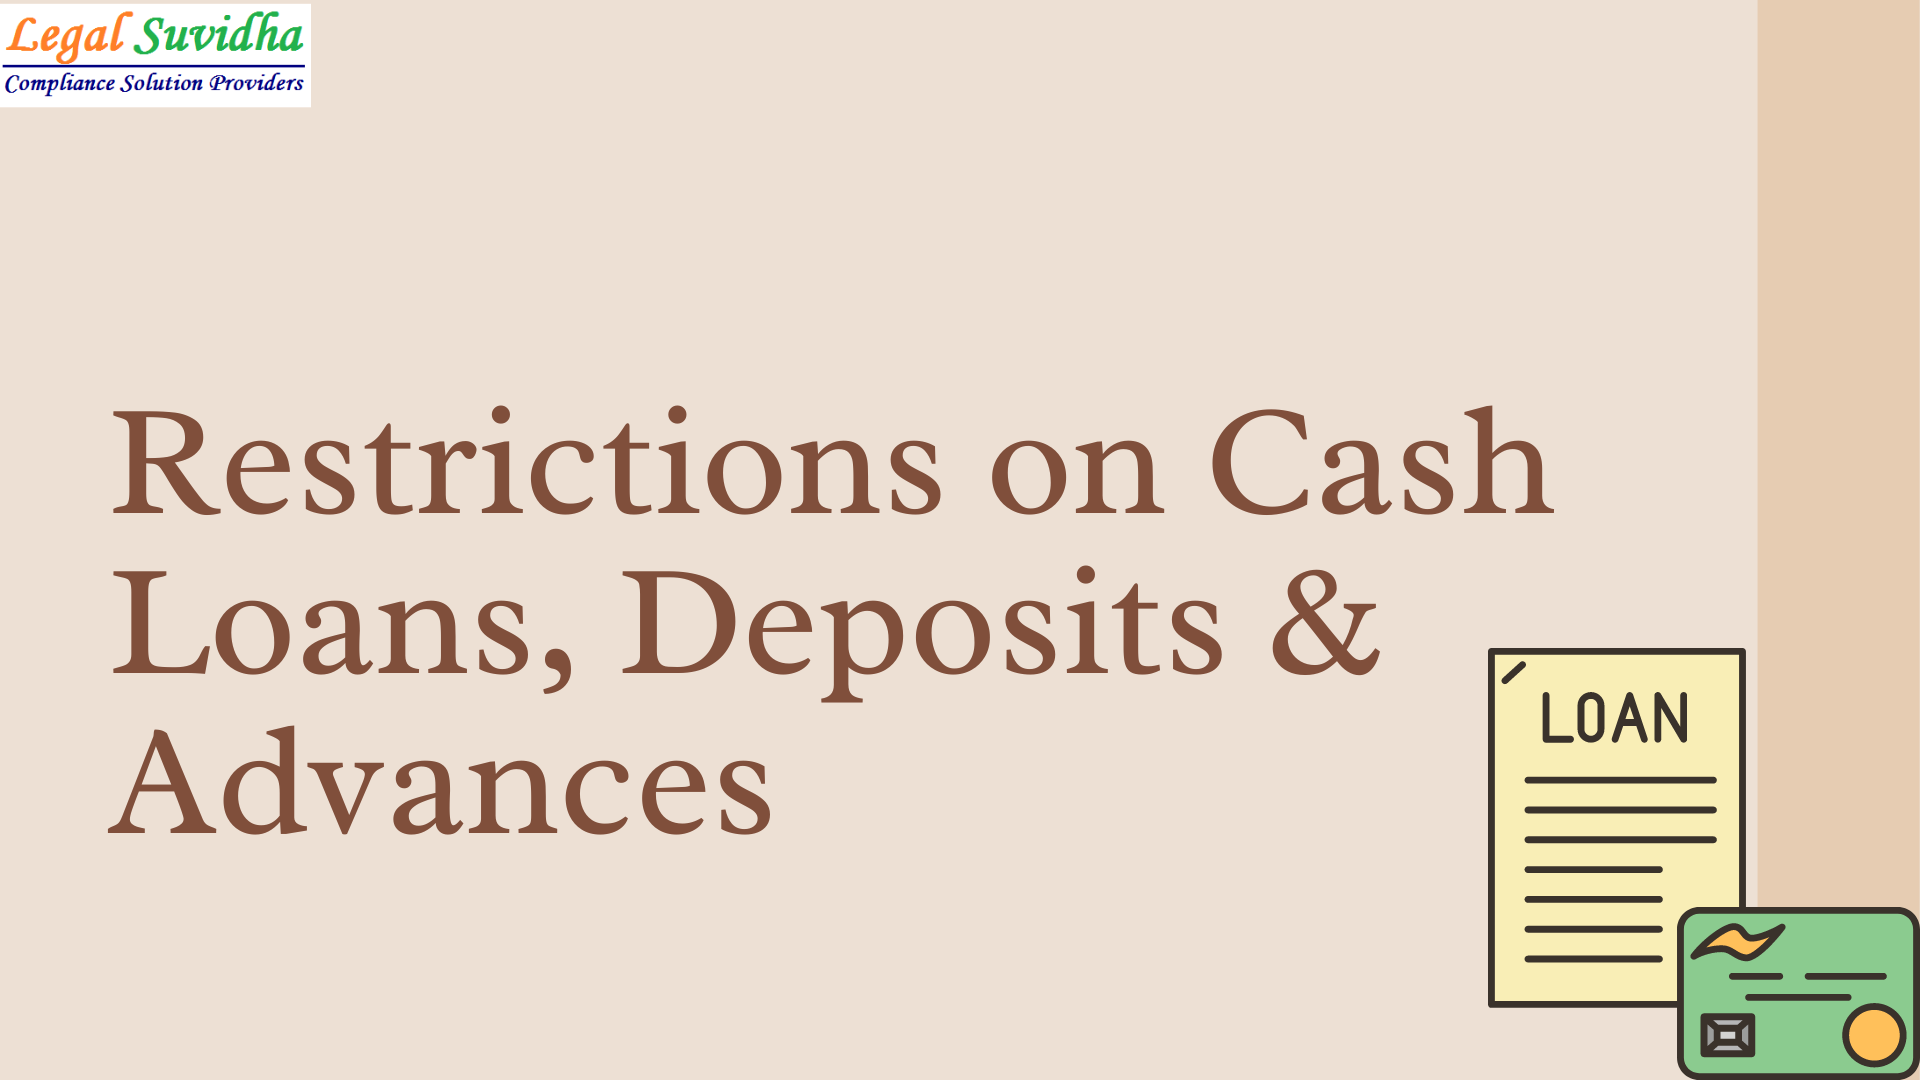 Restrictions on Loans,Deposits & Advances